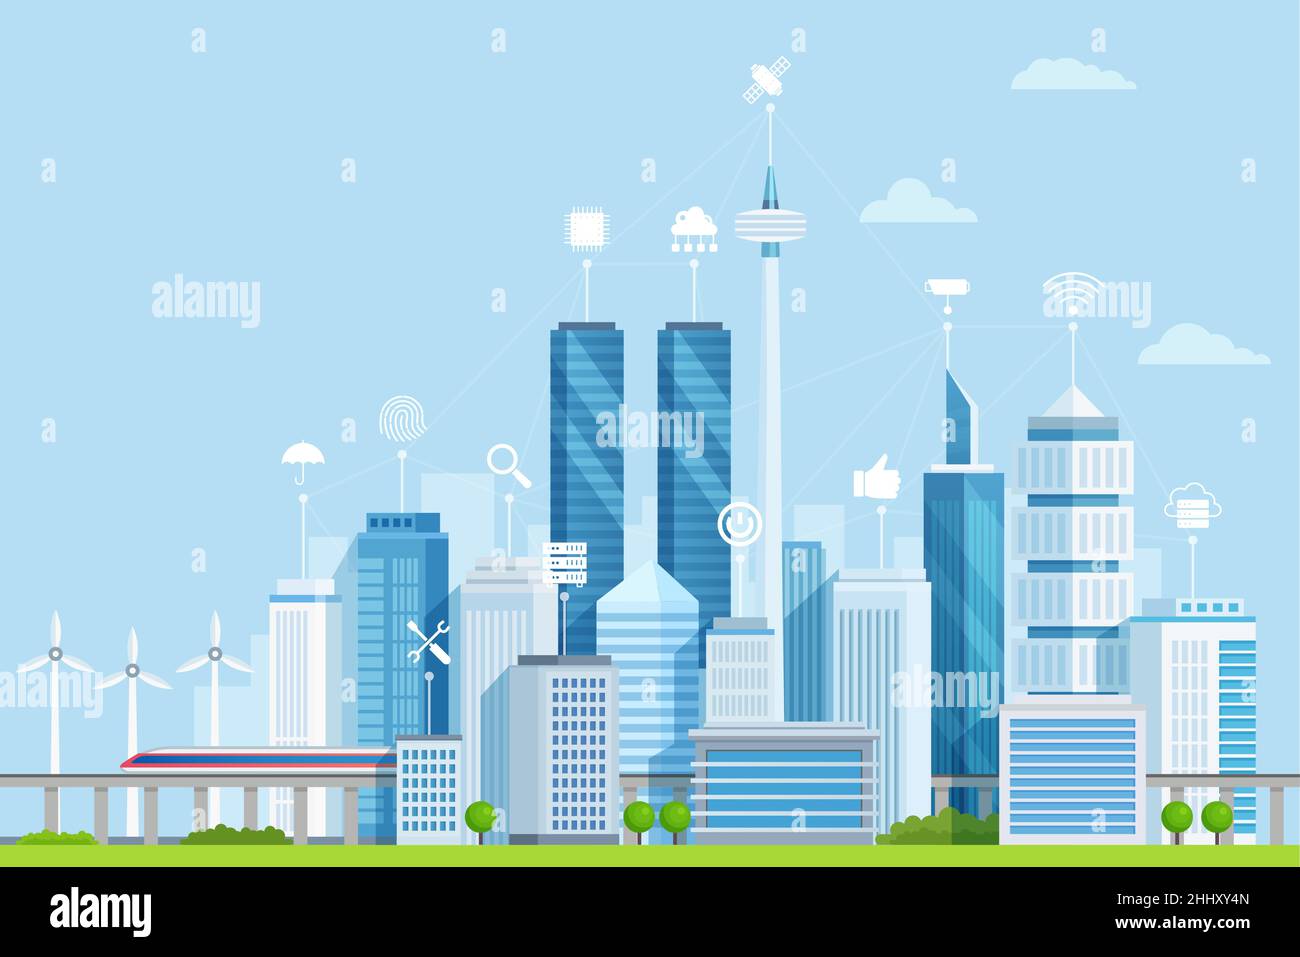 Smart city flat vector illustration. Modern urban area with digital buildings network. Cartoon skyscrapers, towers sending telecommunication, wifi sig Stock Vector